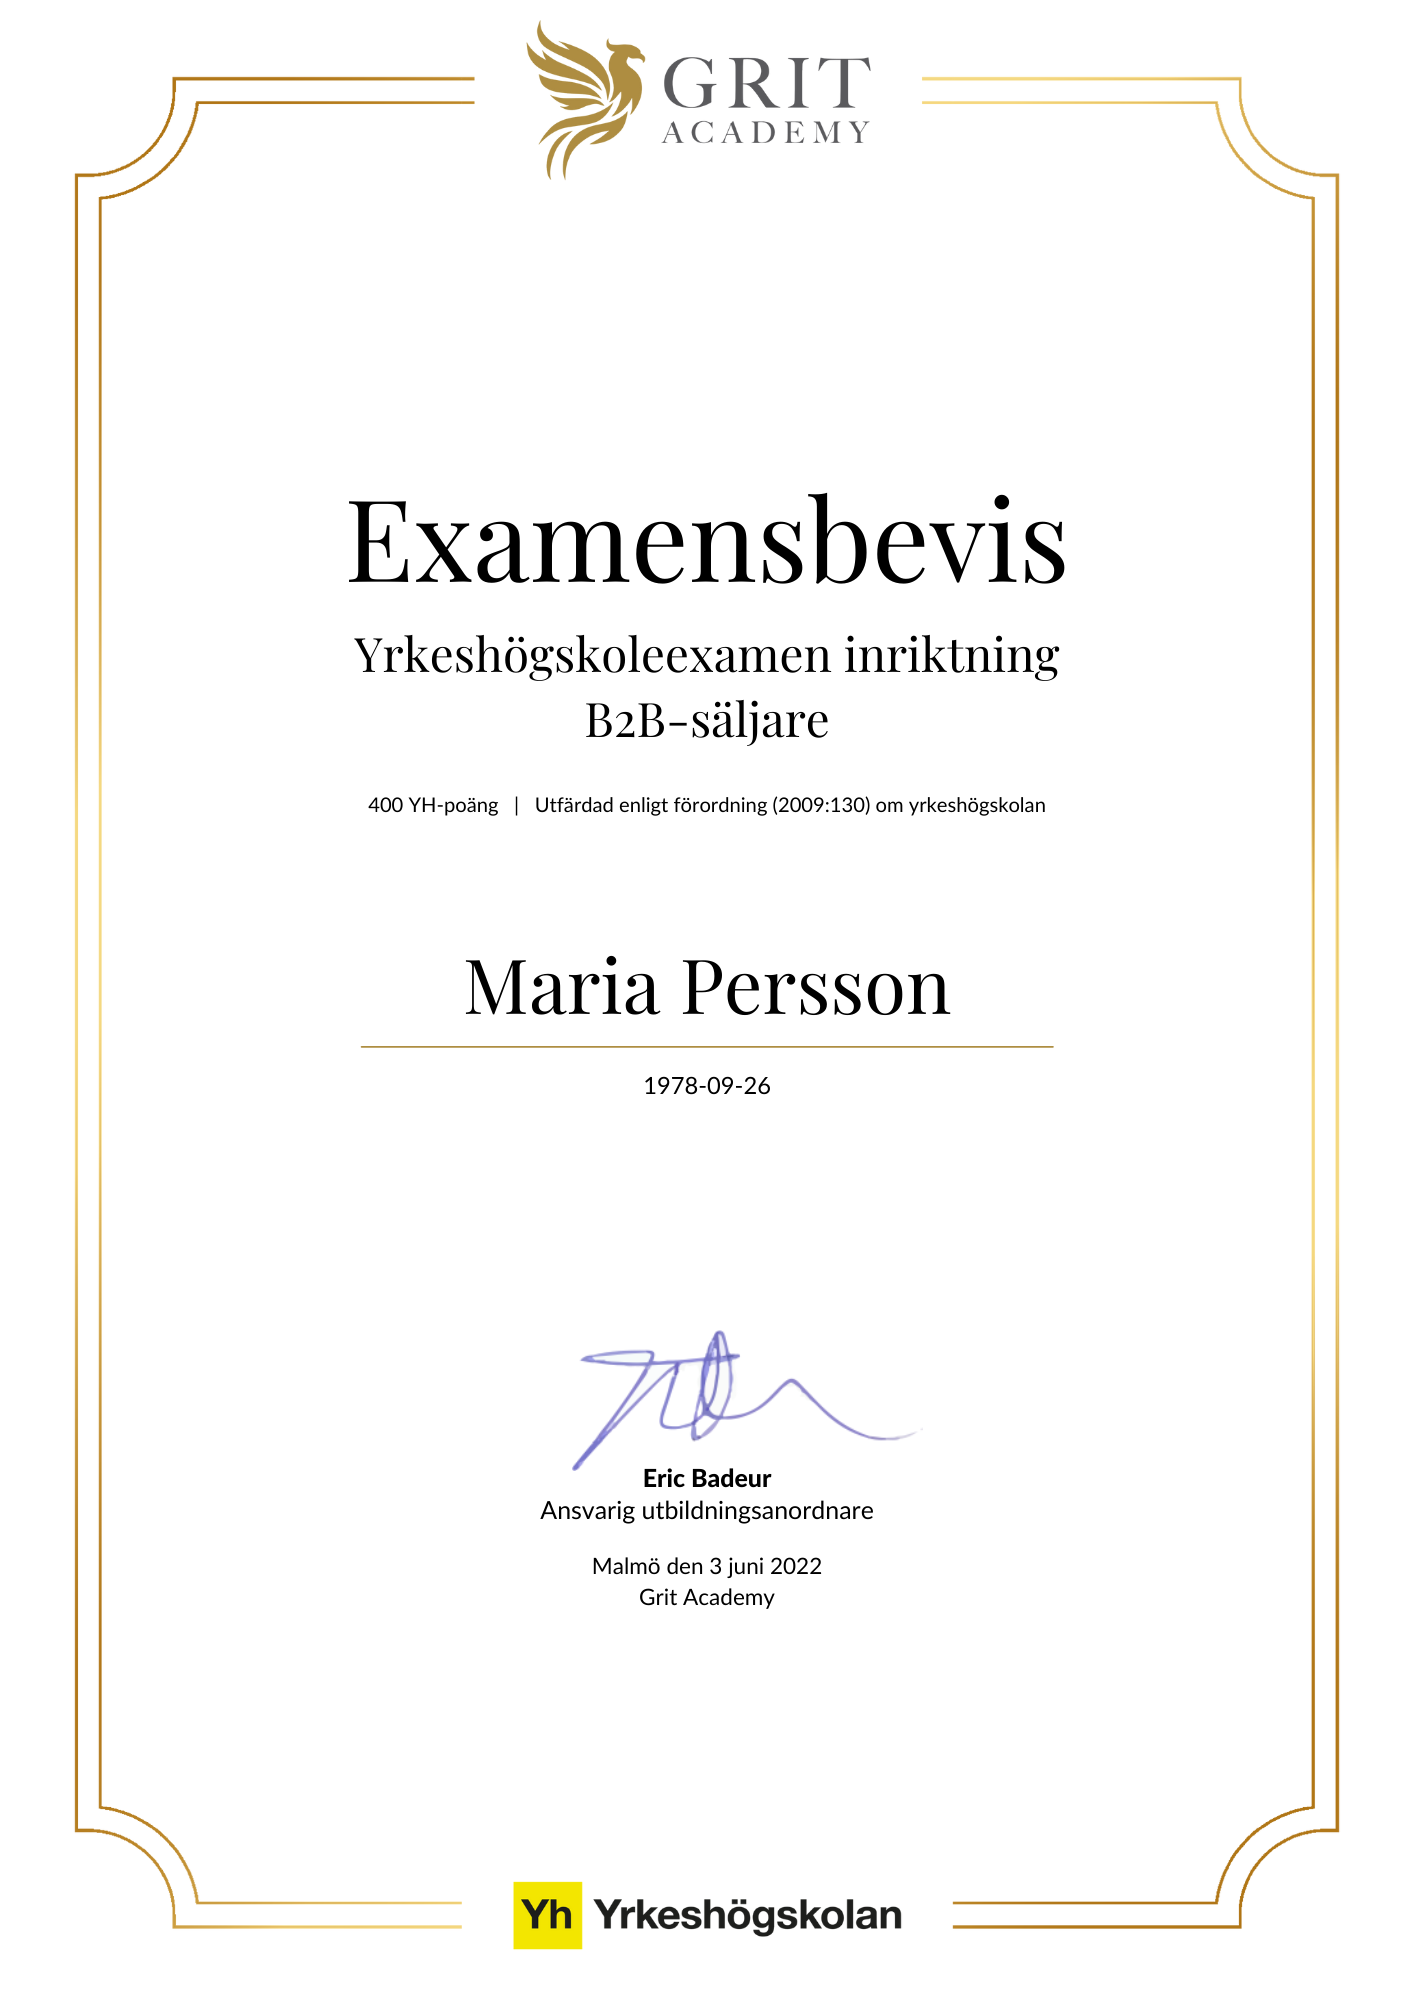 Examensbevis Maria Persson - 1